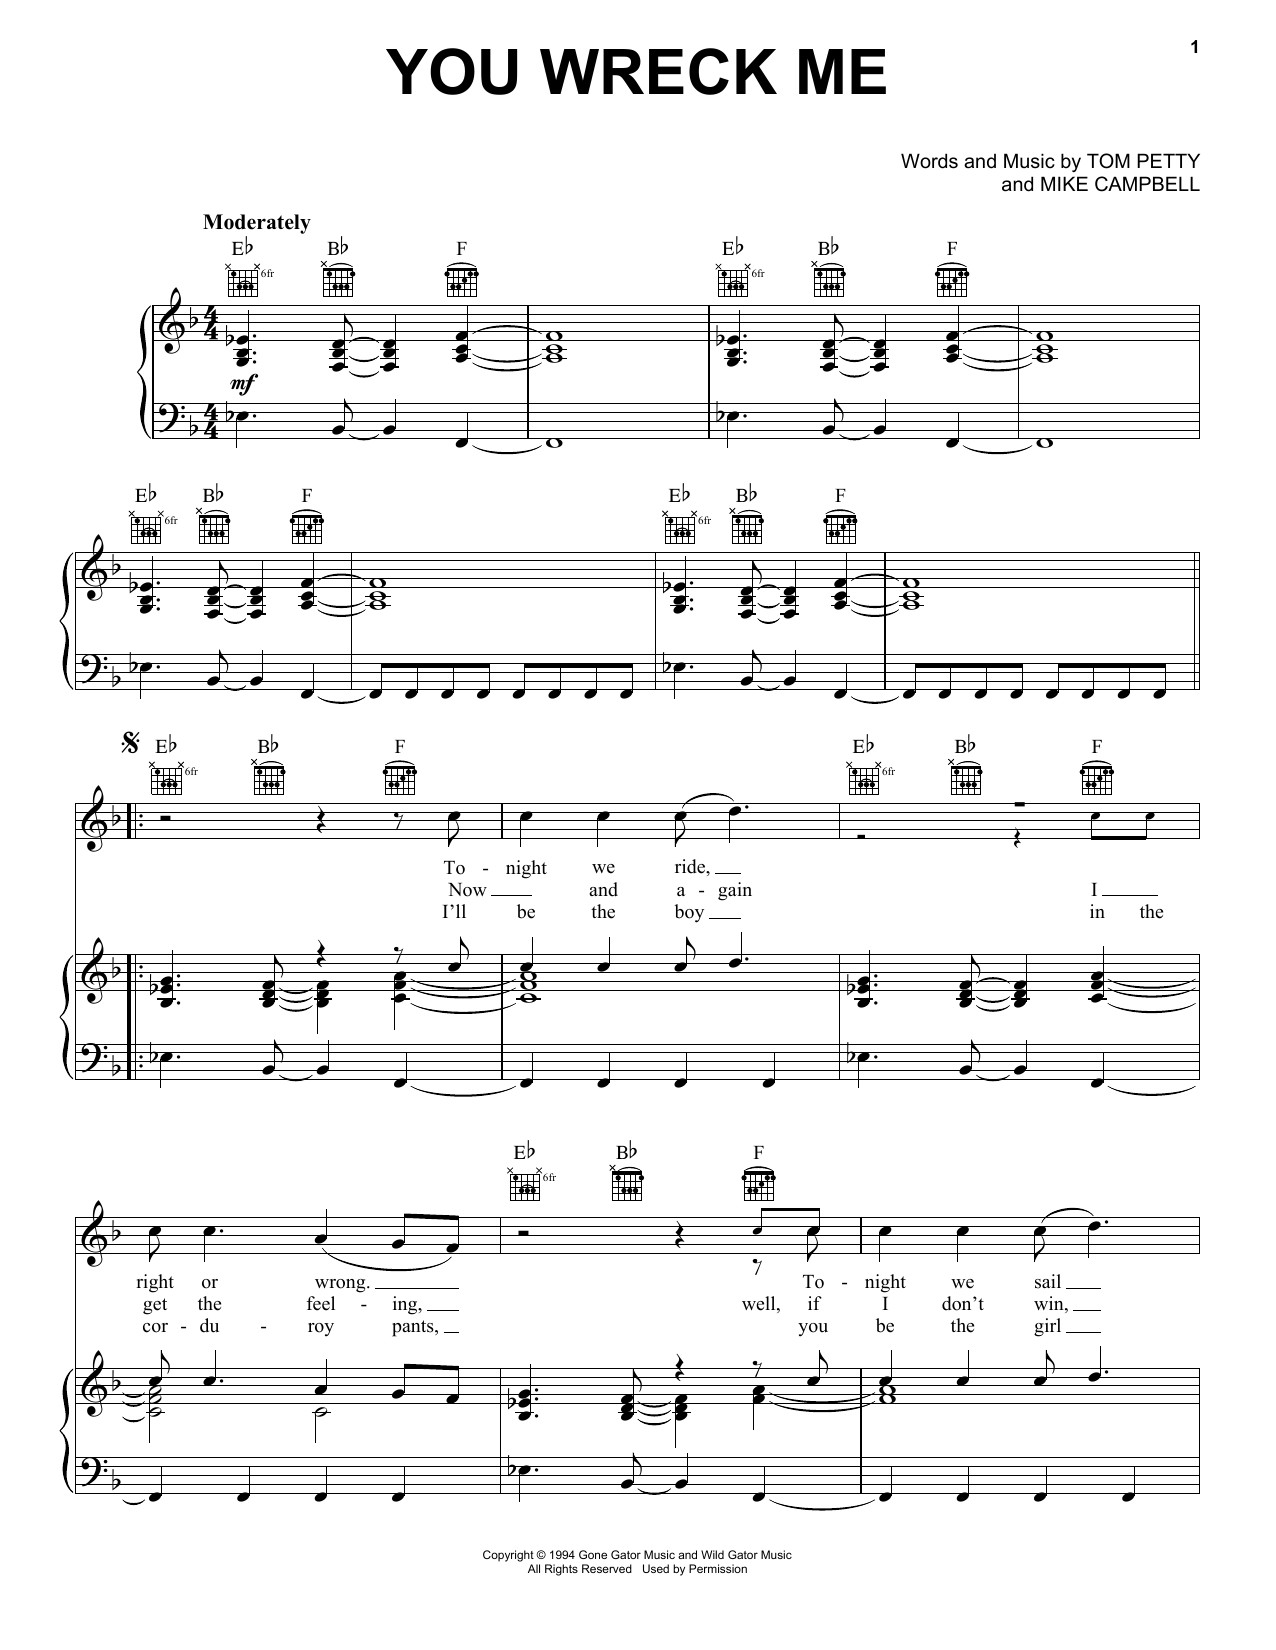 Tom Petty You Wreck Me Sheet Music Notes & Chords for Guitar Chords/Lyrics - Download or Print PDF